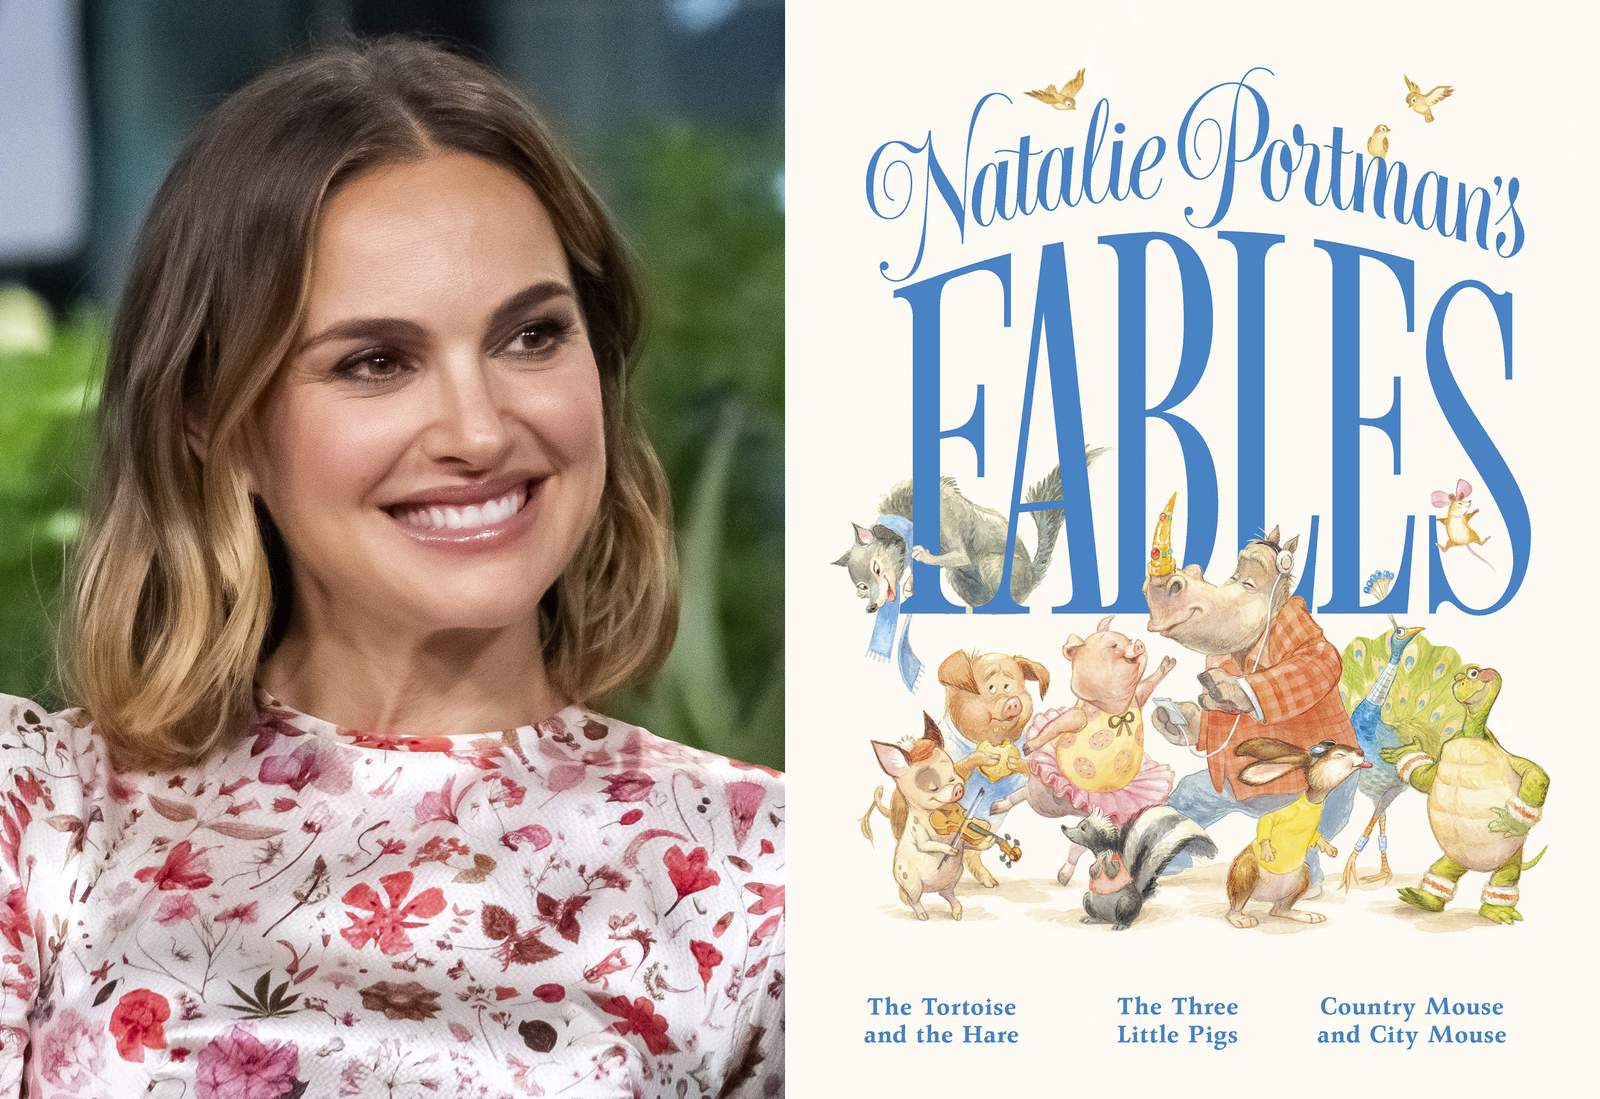 Natalie Portman releases children's book of inclusive fables